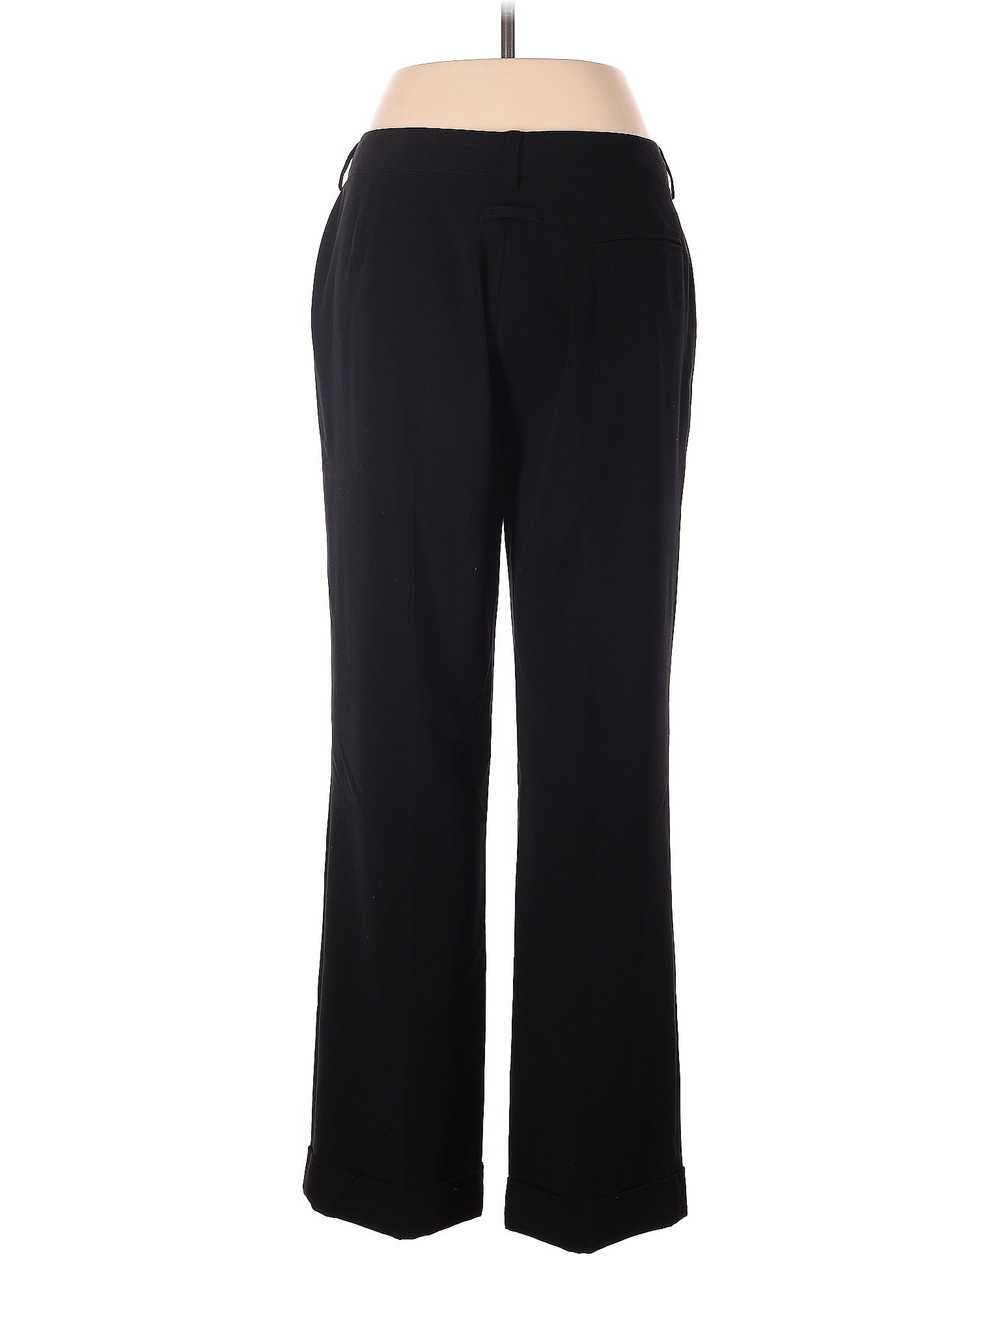 Larry Levine Women Black Dress Pants 6 Petites - image 2